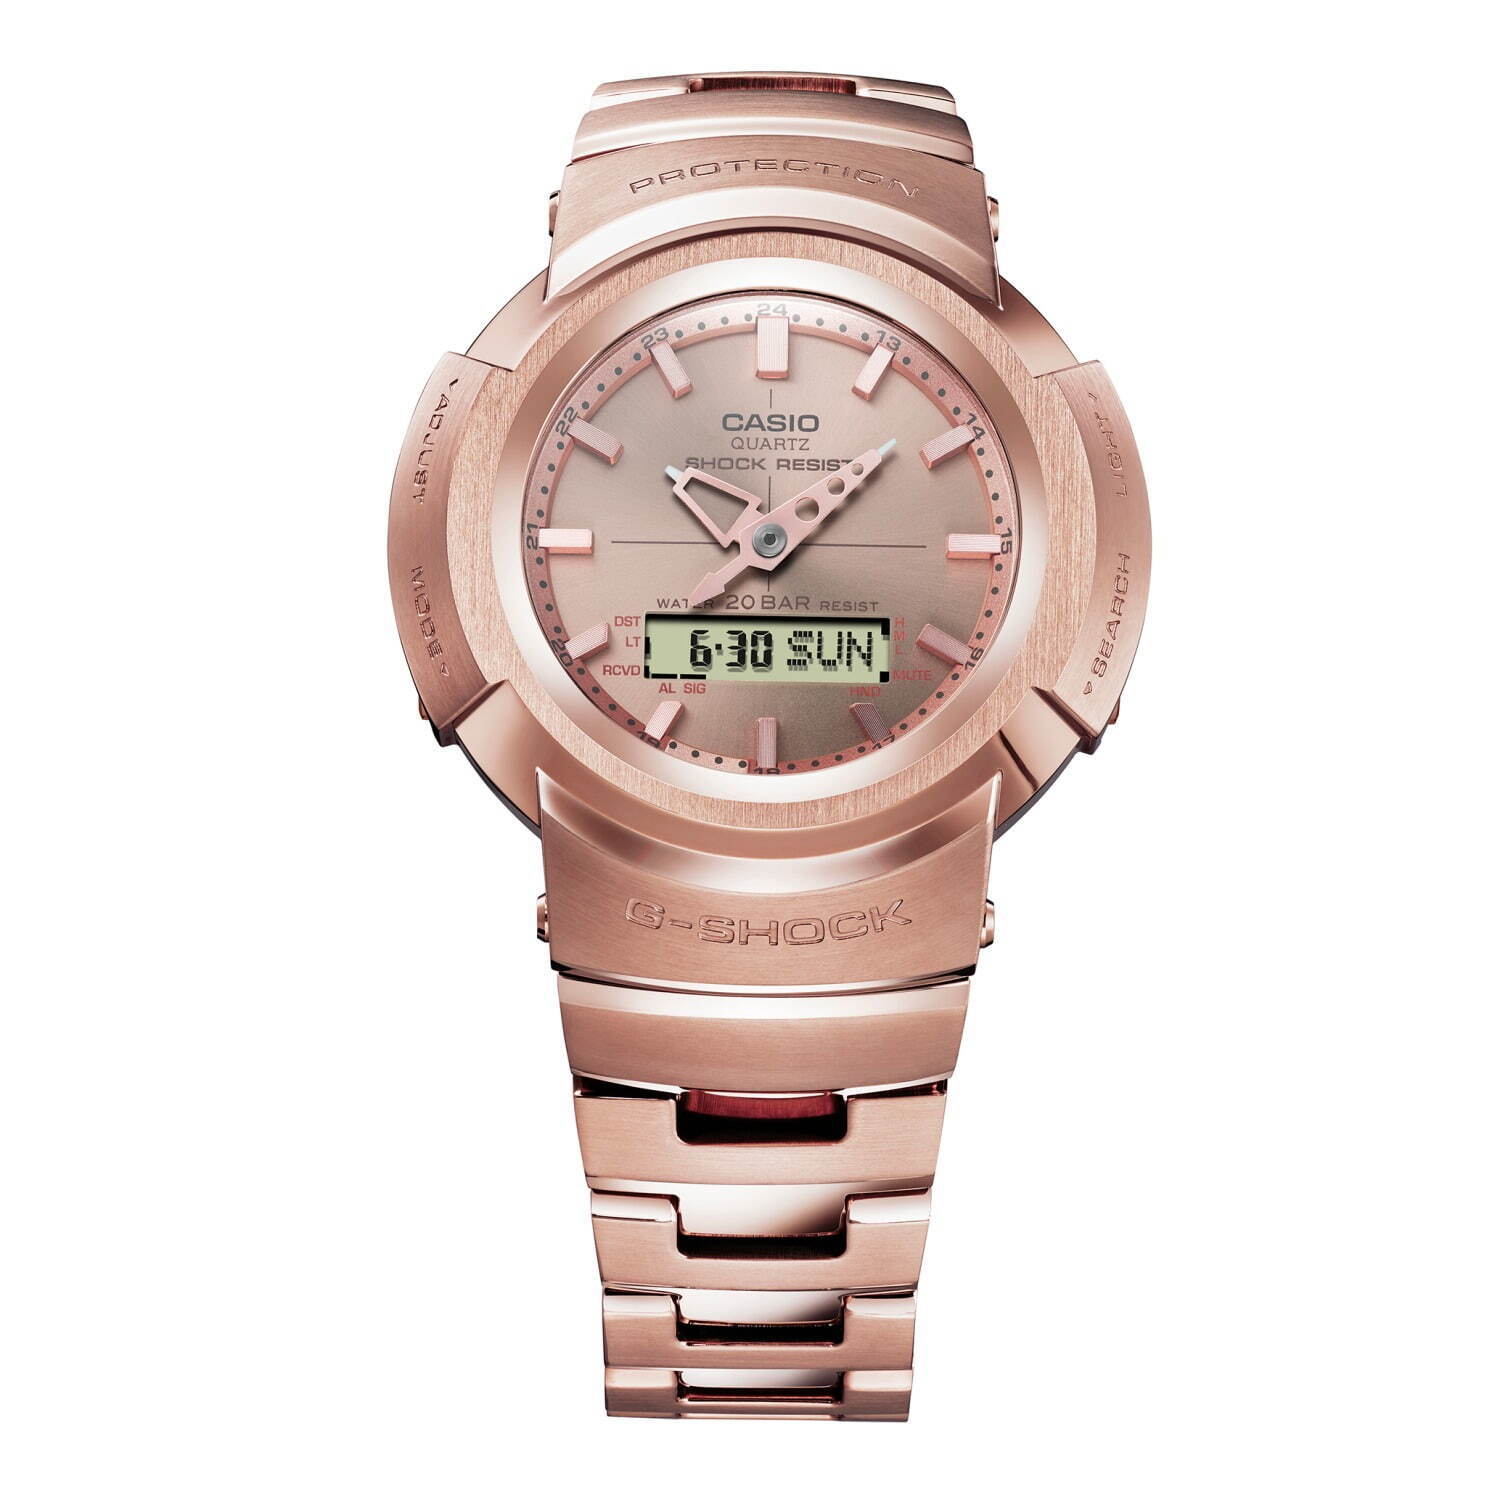 G-SHOCK“ローズゴールド”のフルメタル腕時計、“金属の塊”から削りだ 